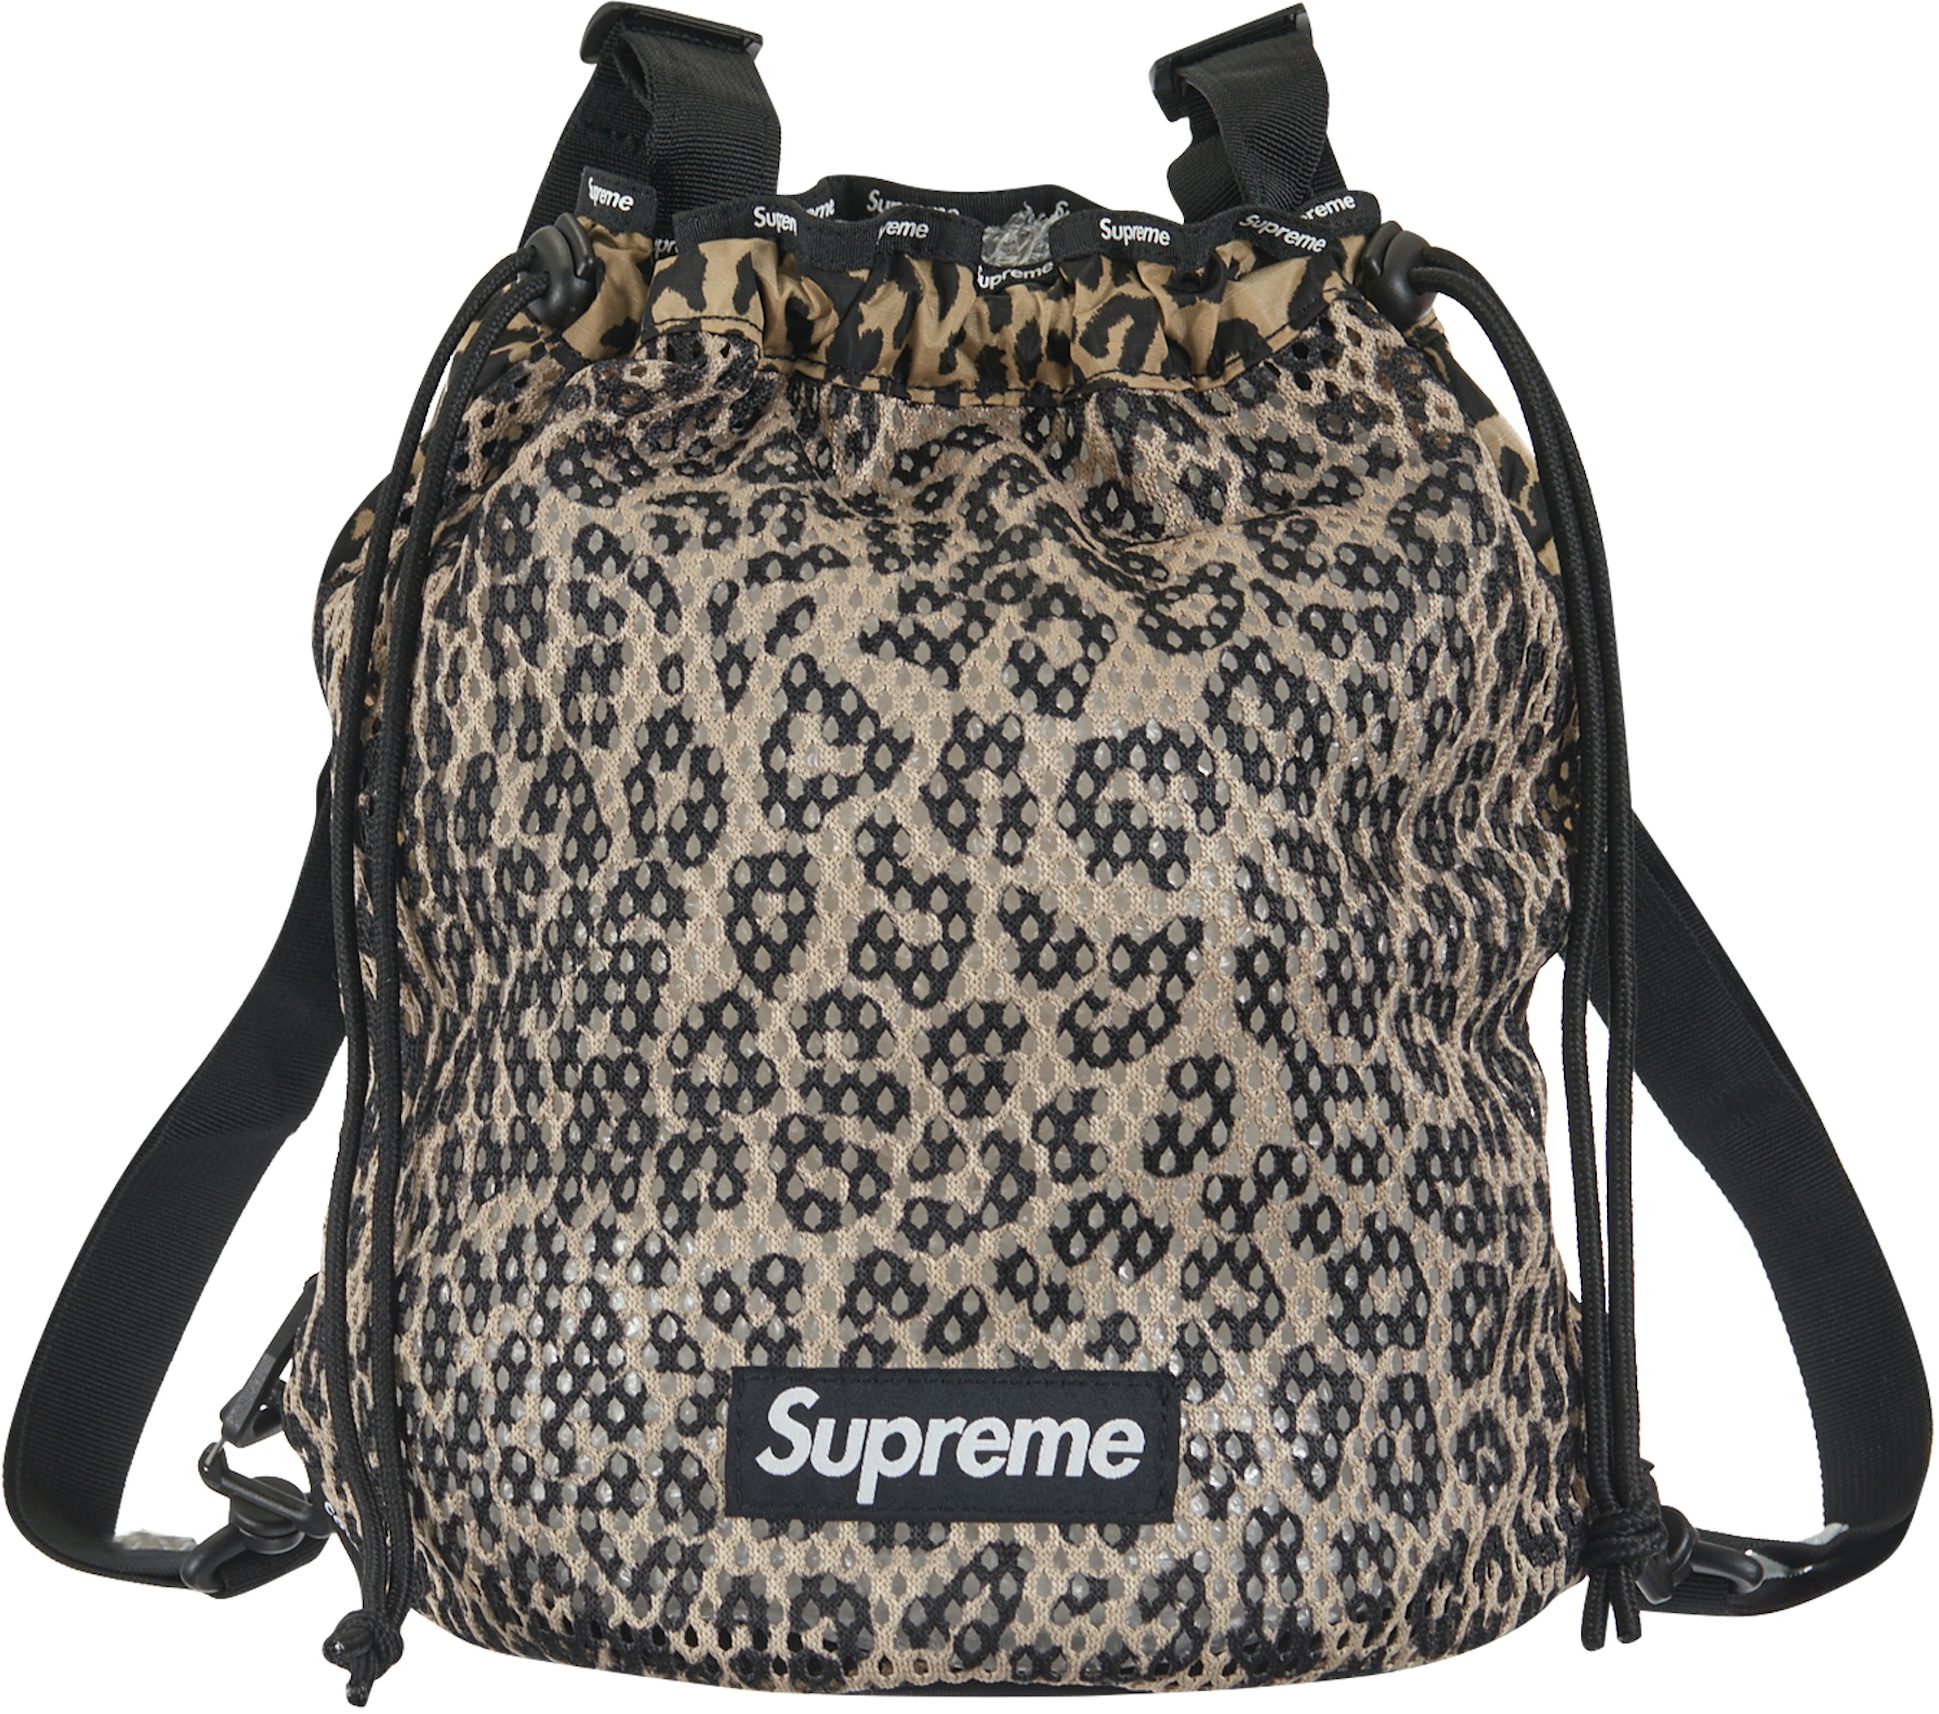 Supreme Leopard Print Backpack - Brown